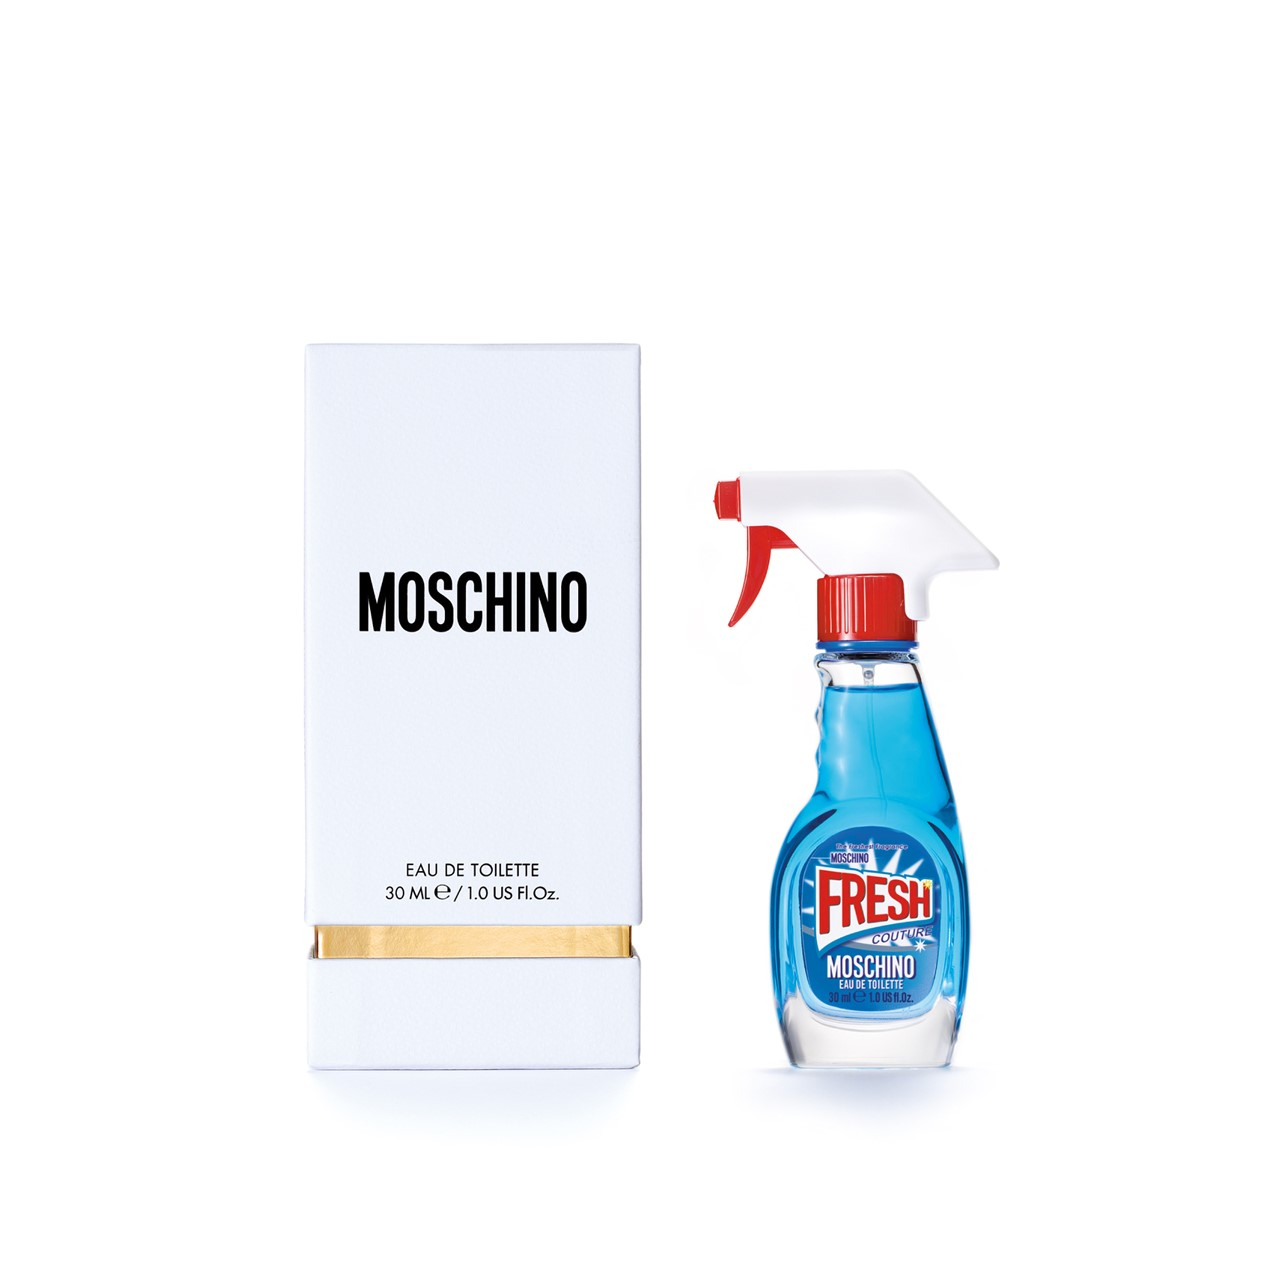 Moschino Fresh Couture Eau de Toilette 30ml (1.0fl.oz.)